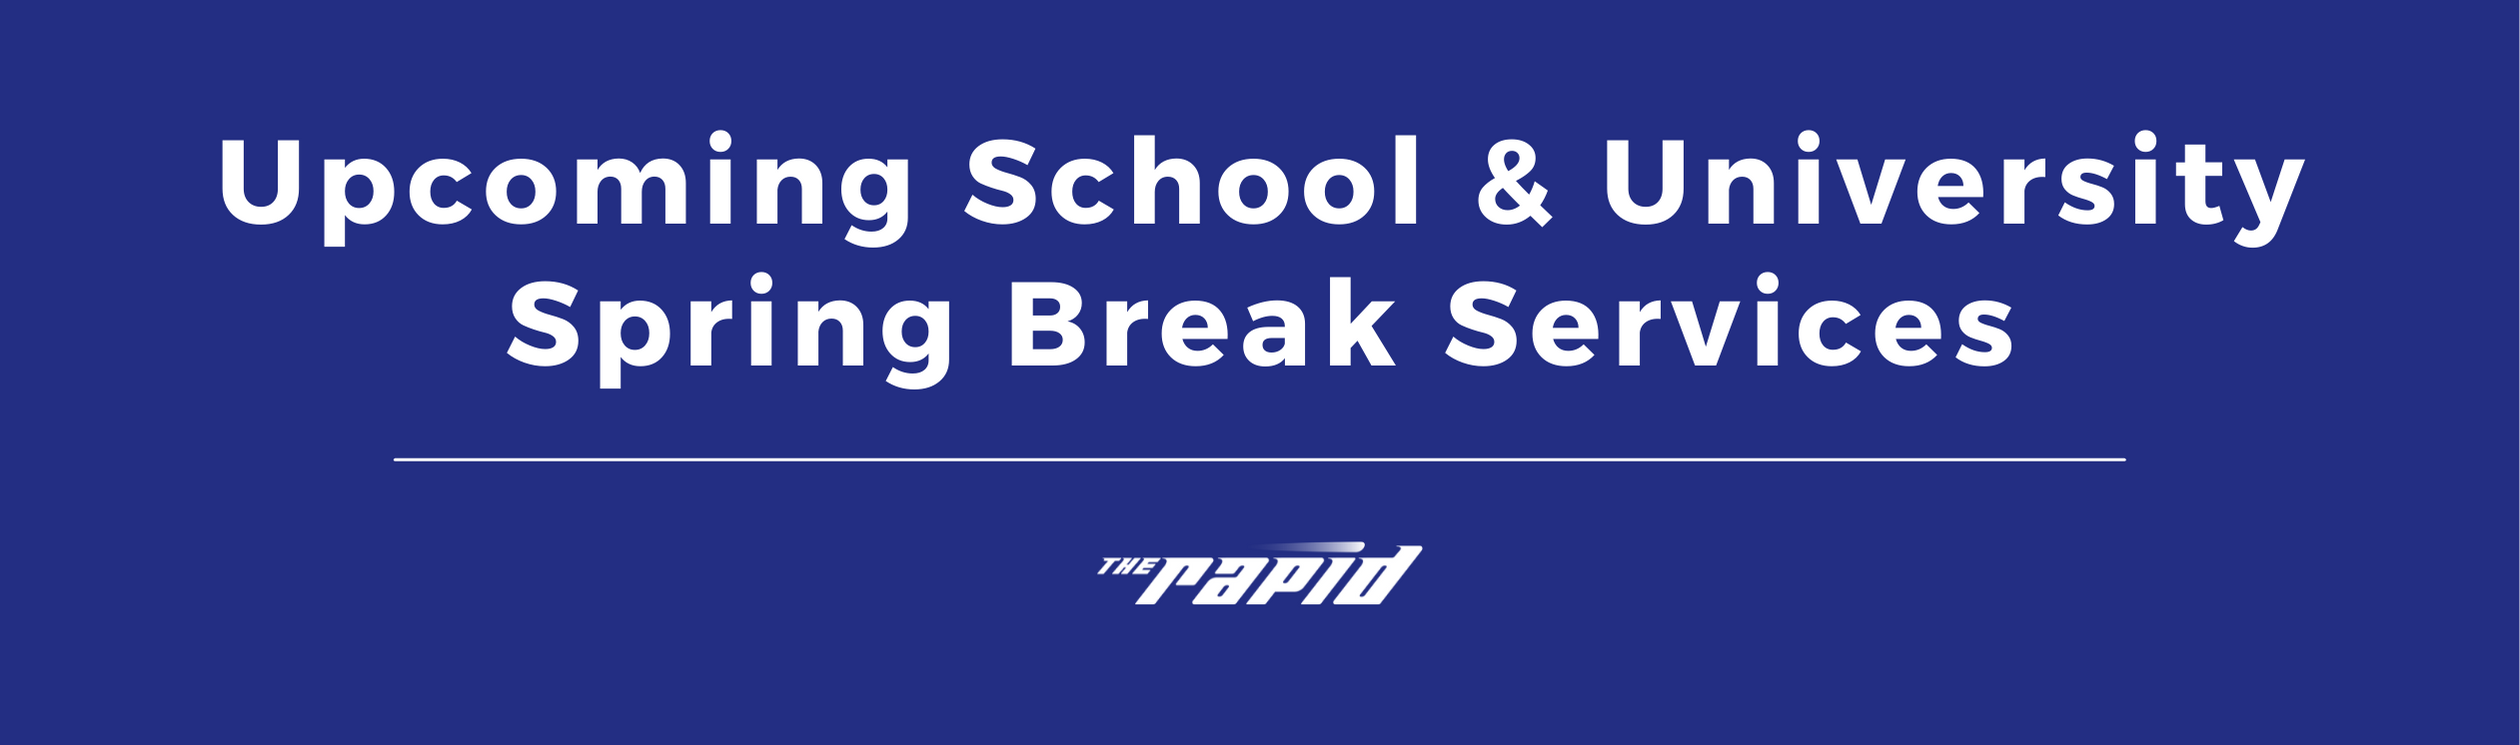 website article - school spring break service 2022 - hero img